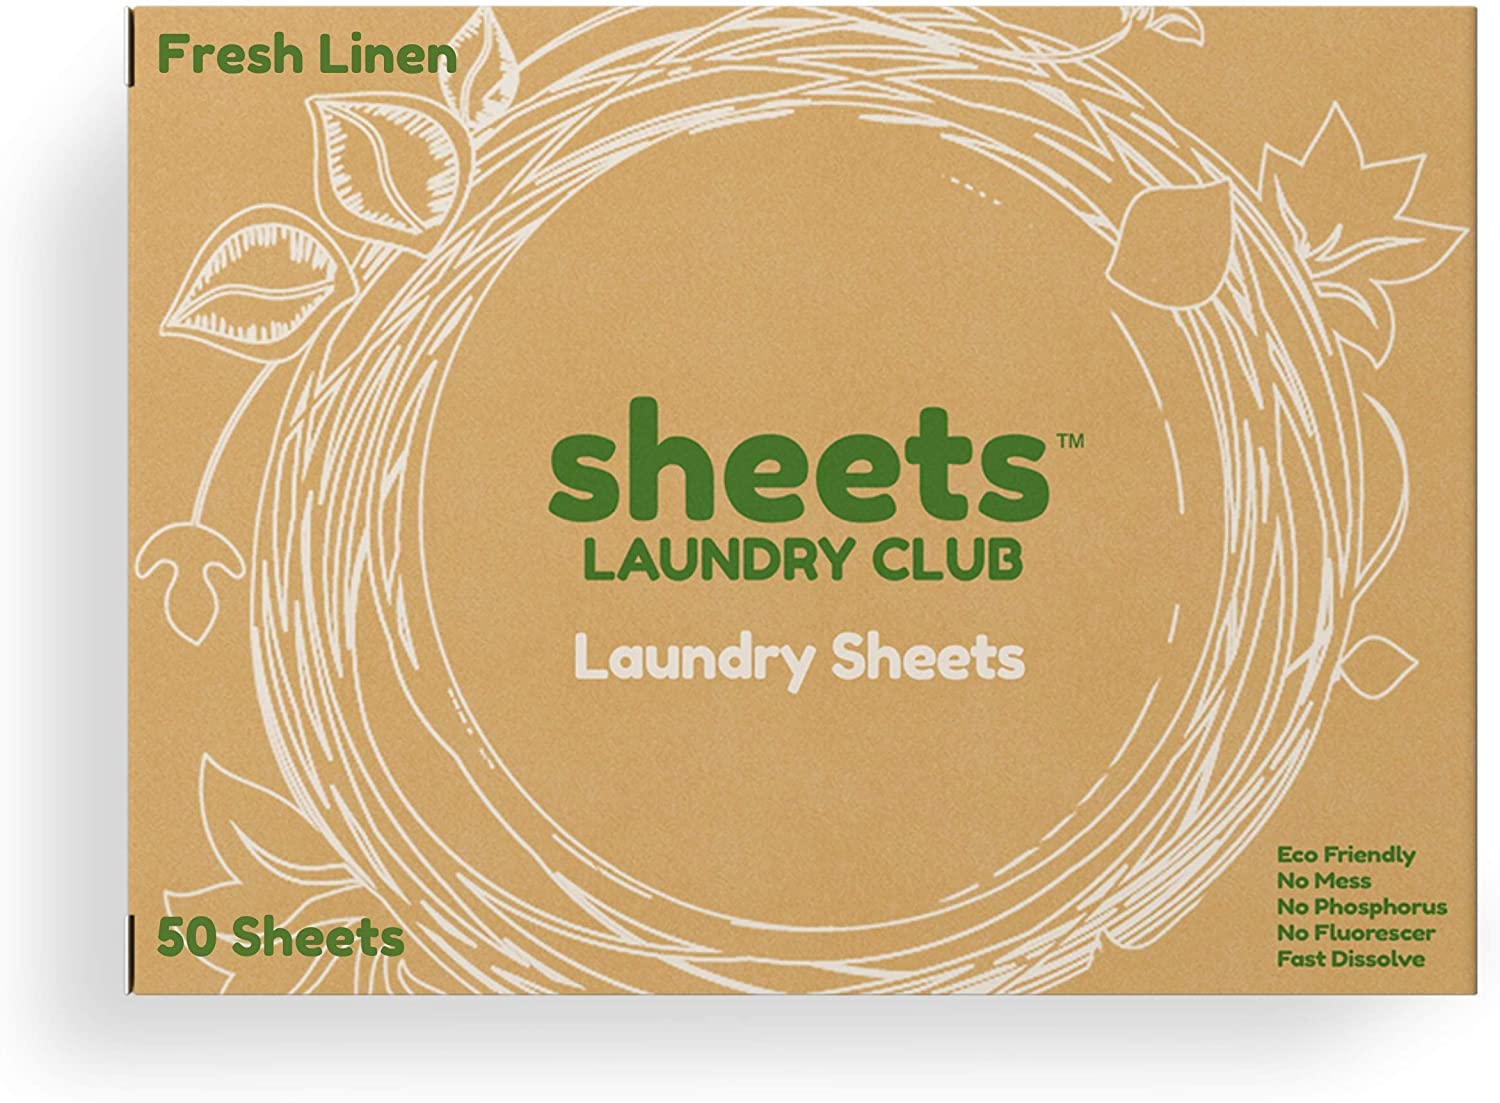 Sheets Laundry Club Laundry Sheets